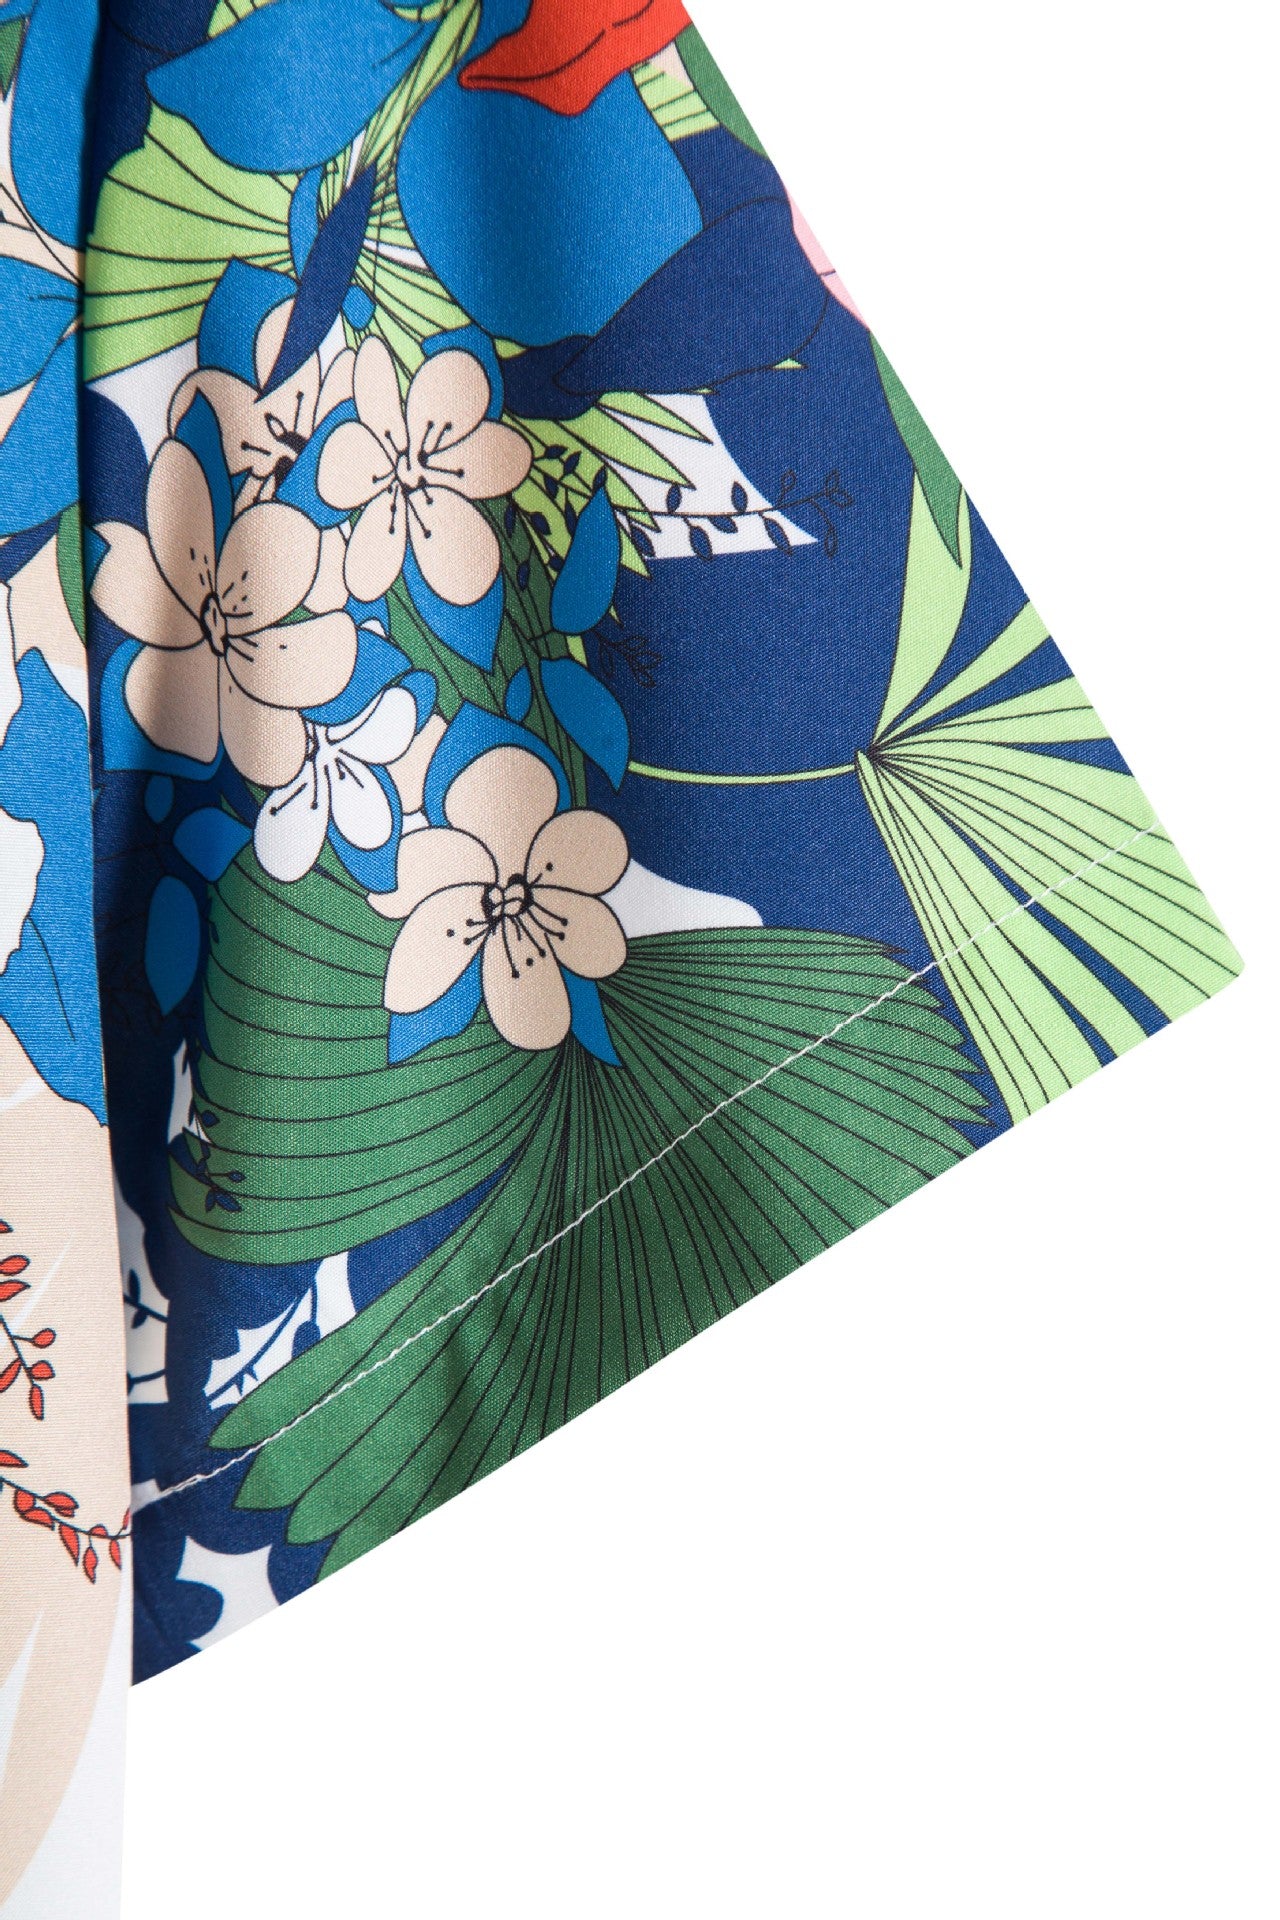 Floral Print Beach Blue Lapel Shirt – Casual Elegance in Cotton Blend